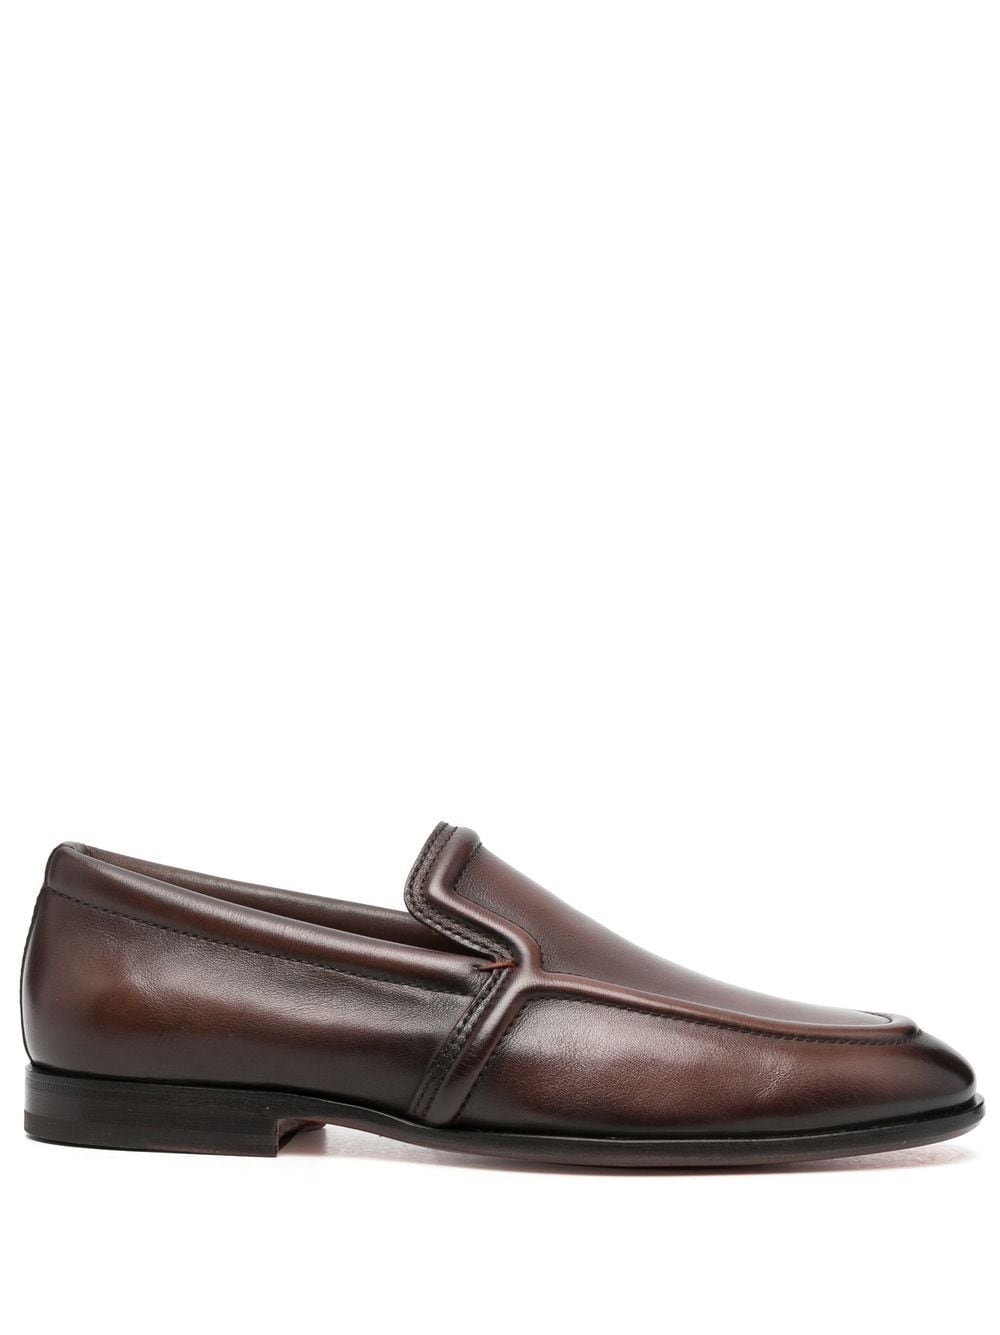 Santoni polished leather loafers - Brown von Santoni